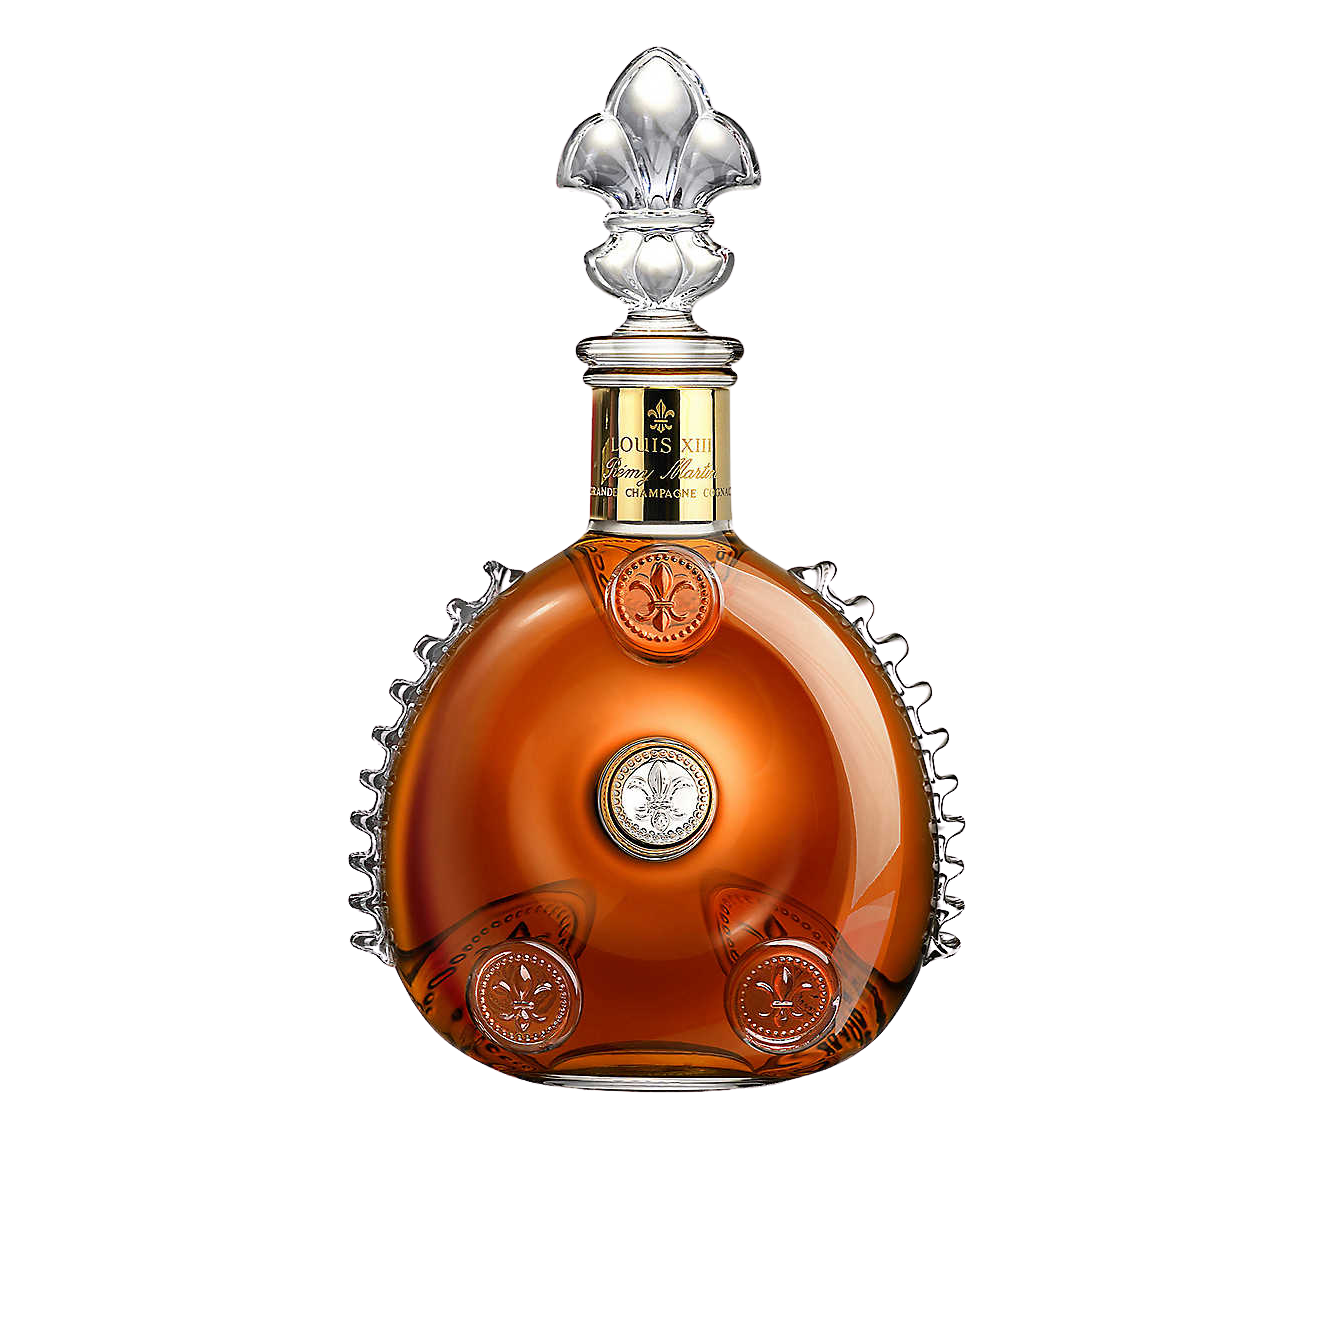 Remy Louis XIII Cognac